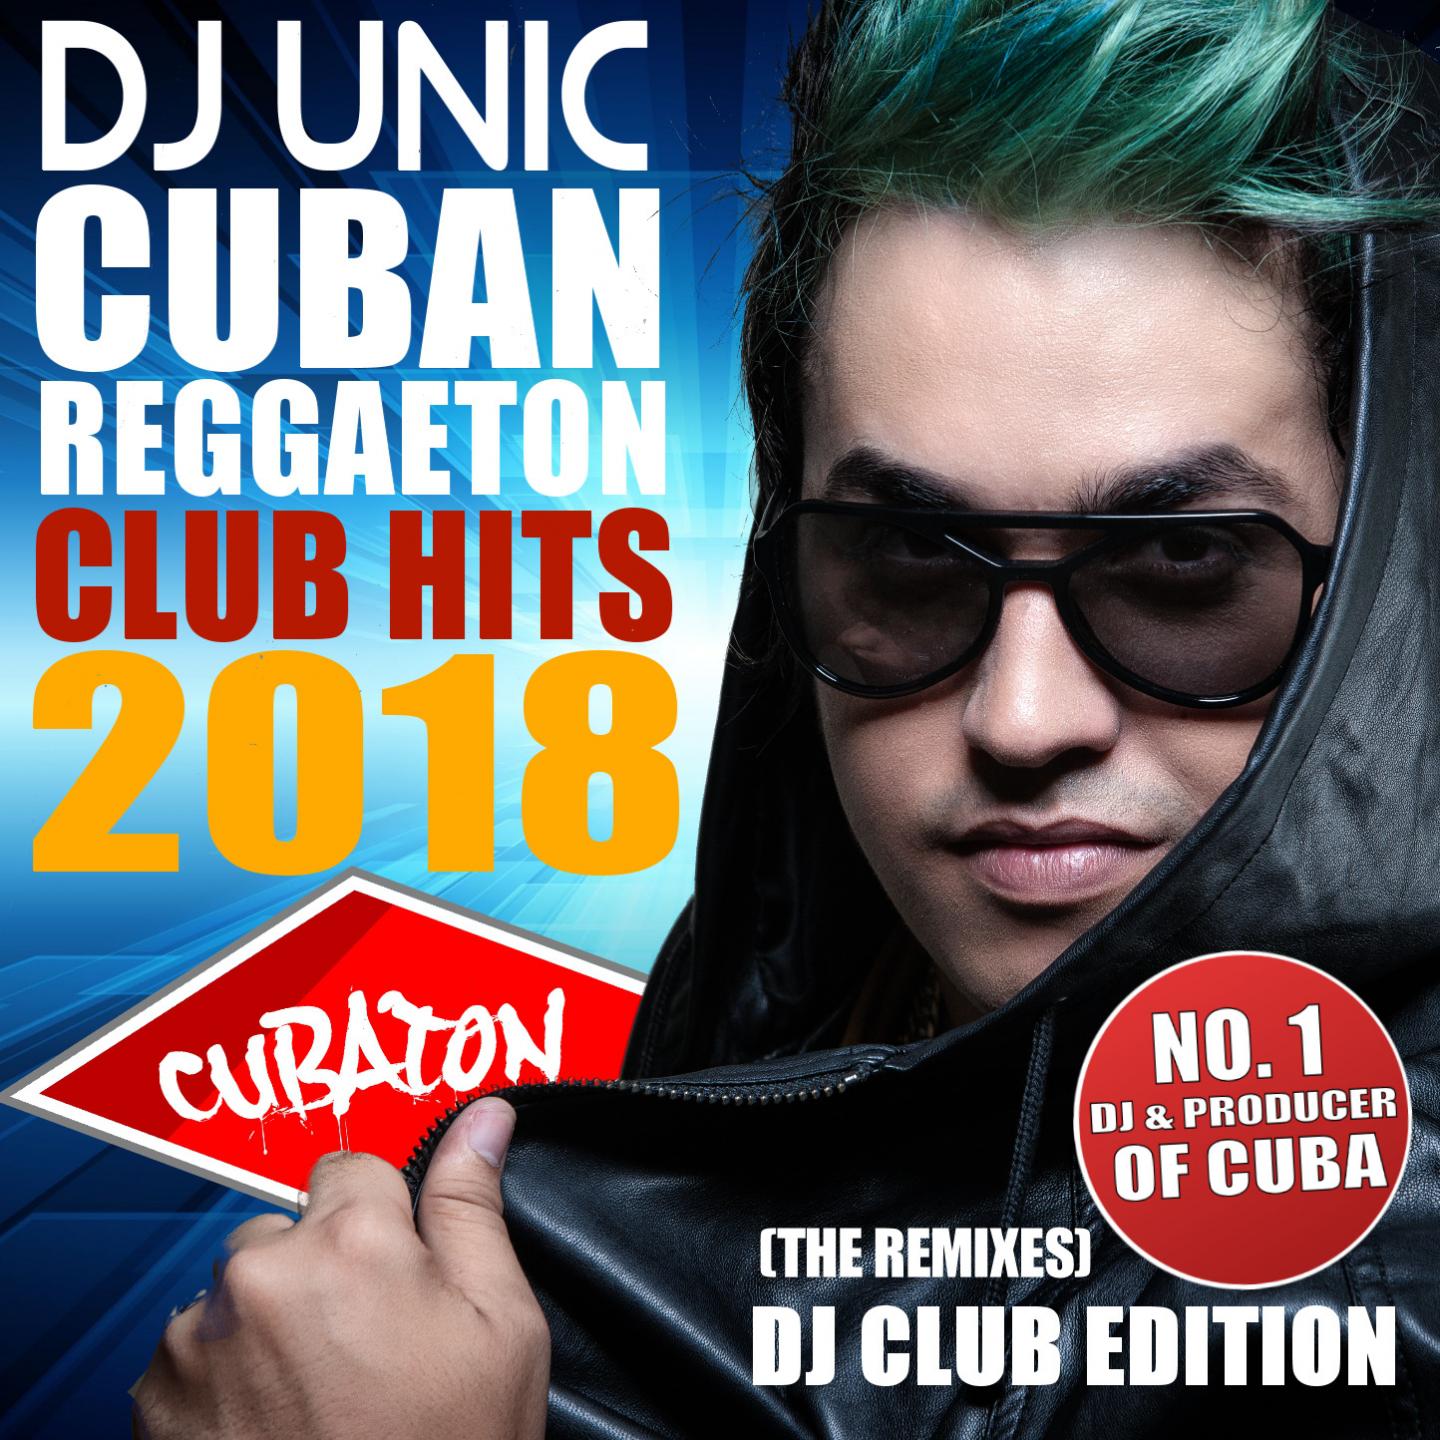 DJ Unic Cuban Reggaeton Club Hits 2018 (The Remixes - DJ Club Edition)